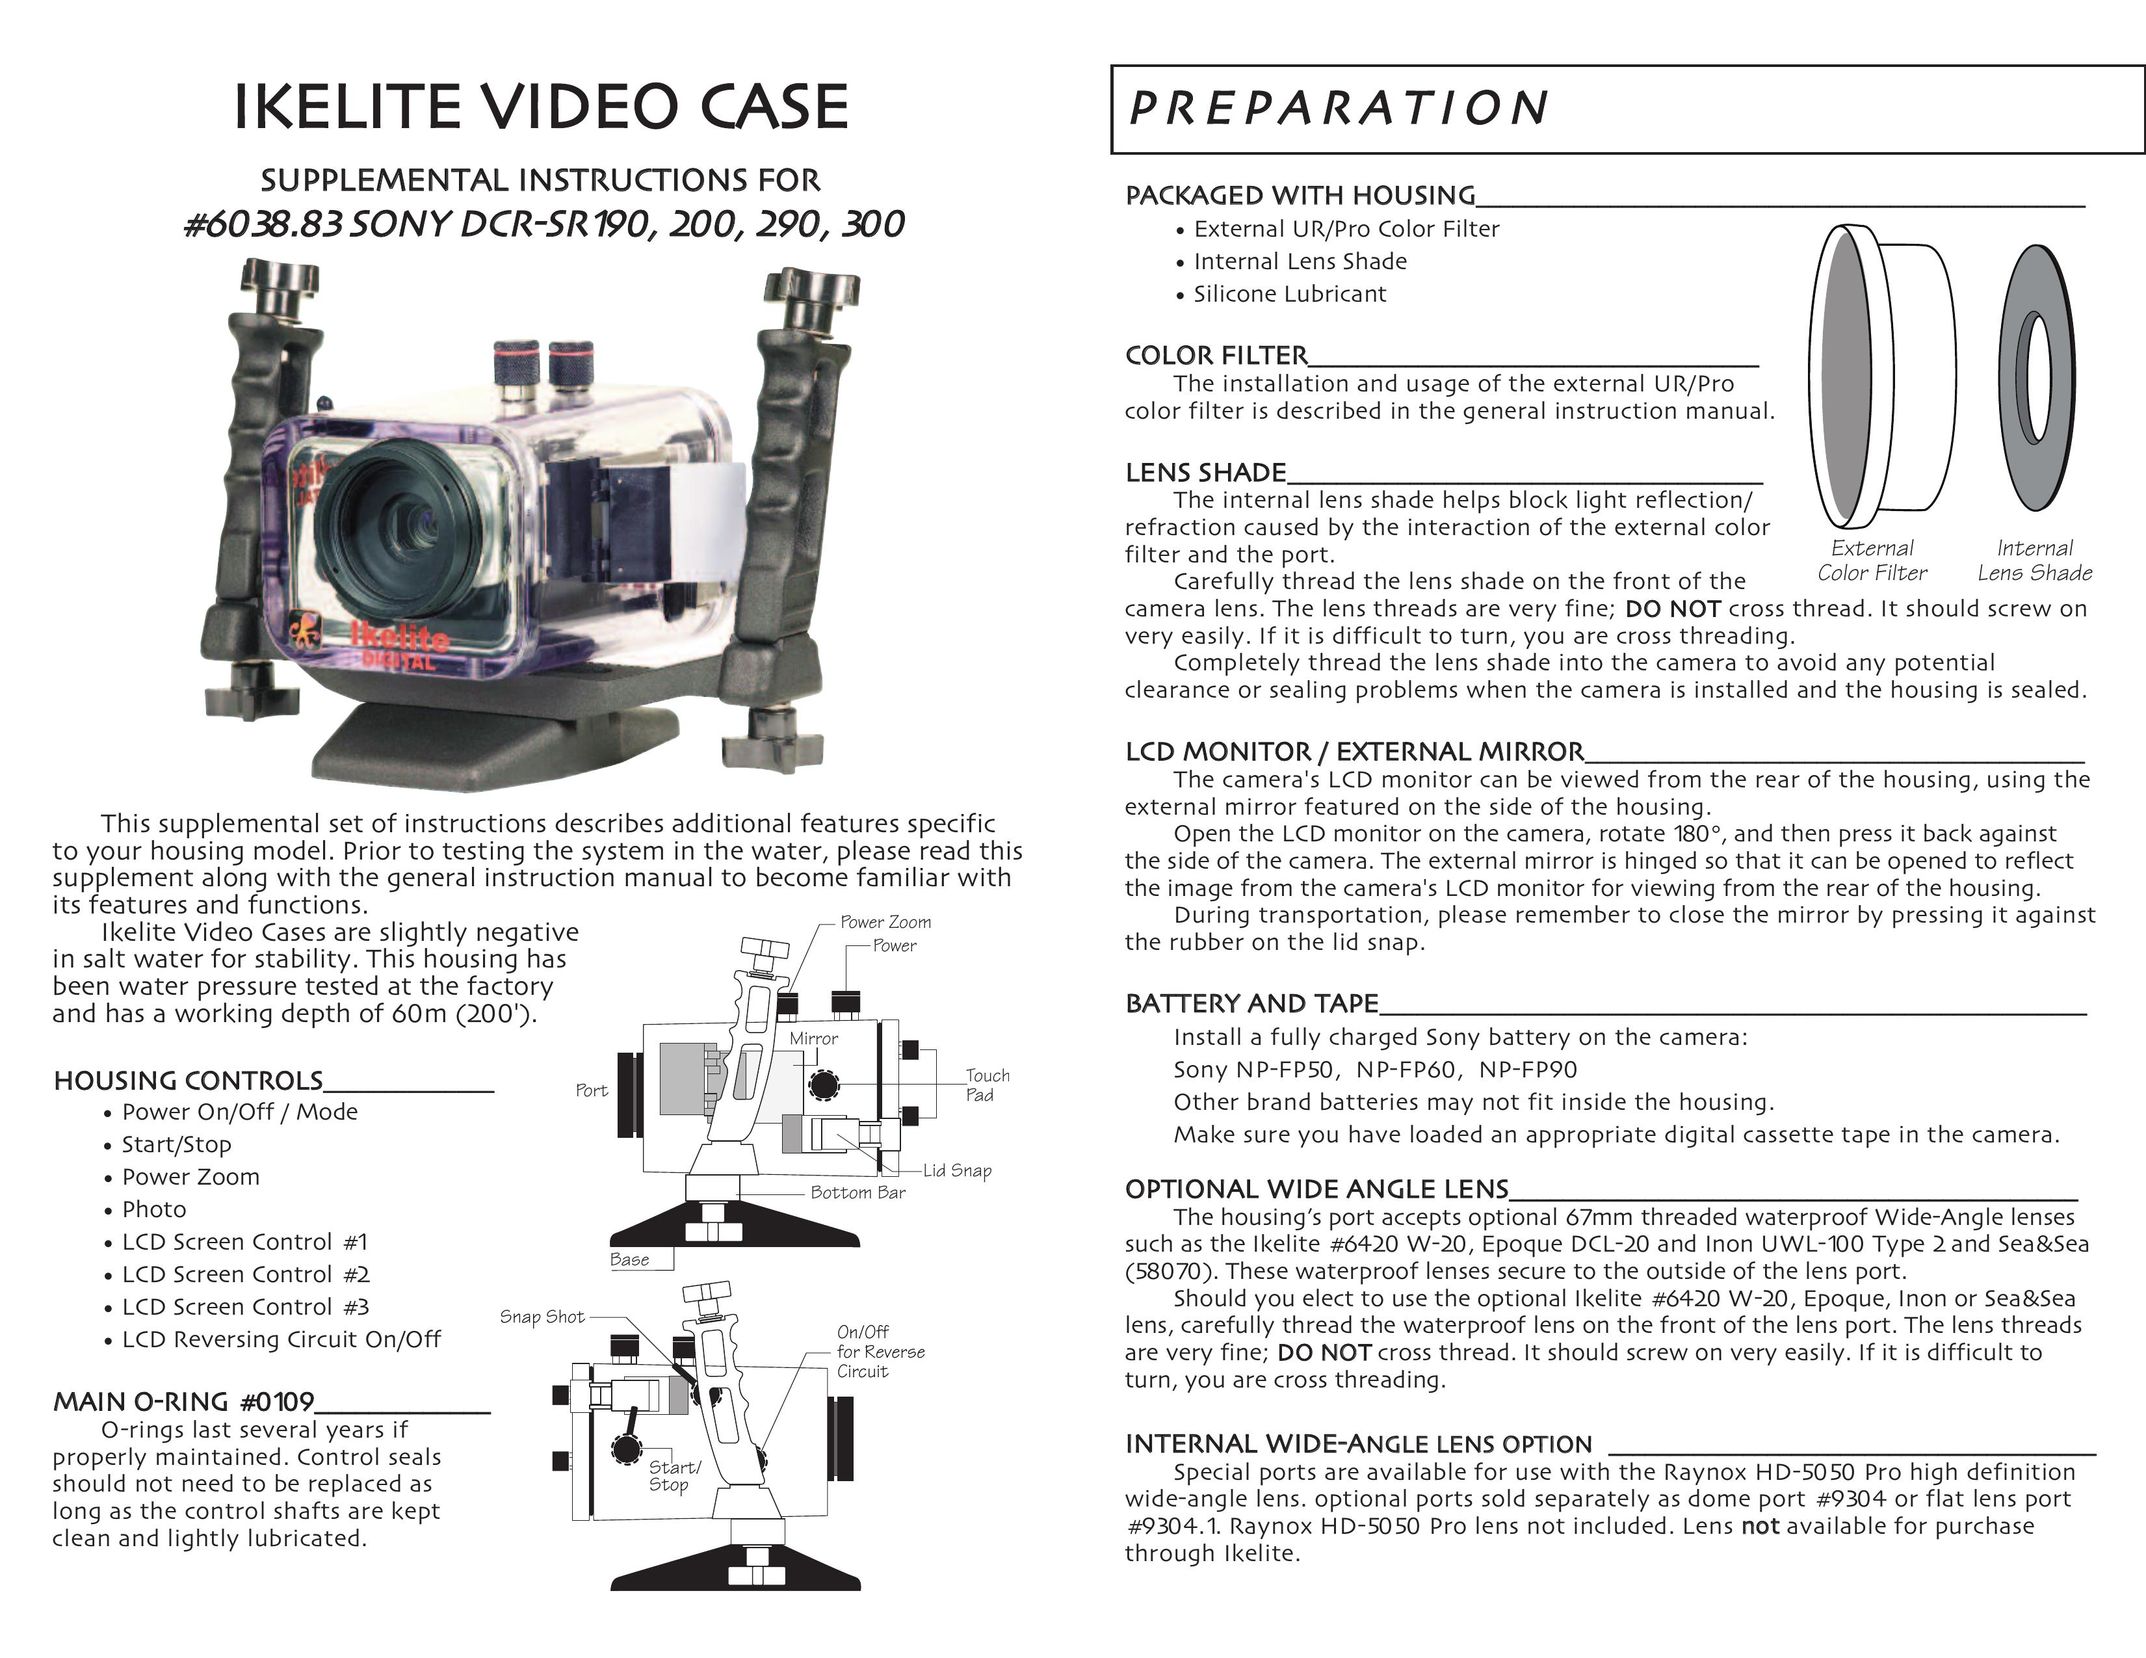 Ikelite DCR-SR290 Carrying Case User Manual